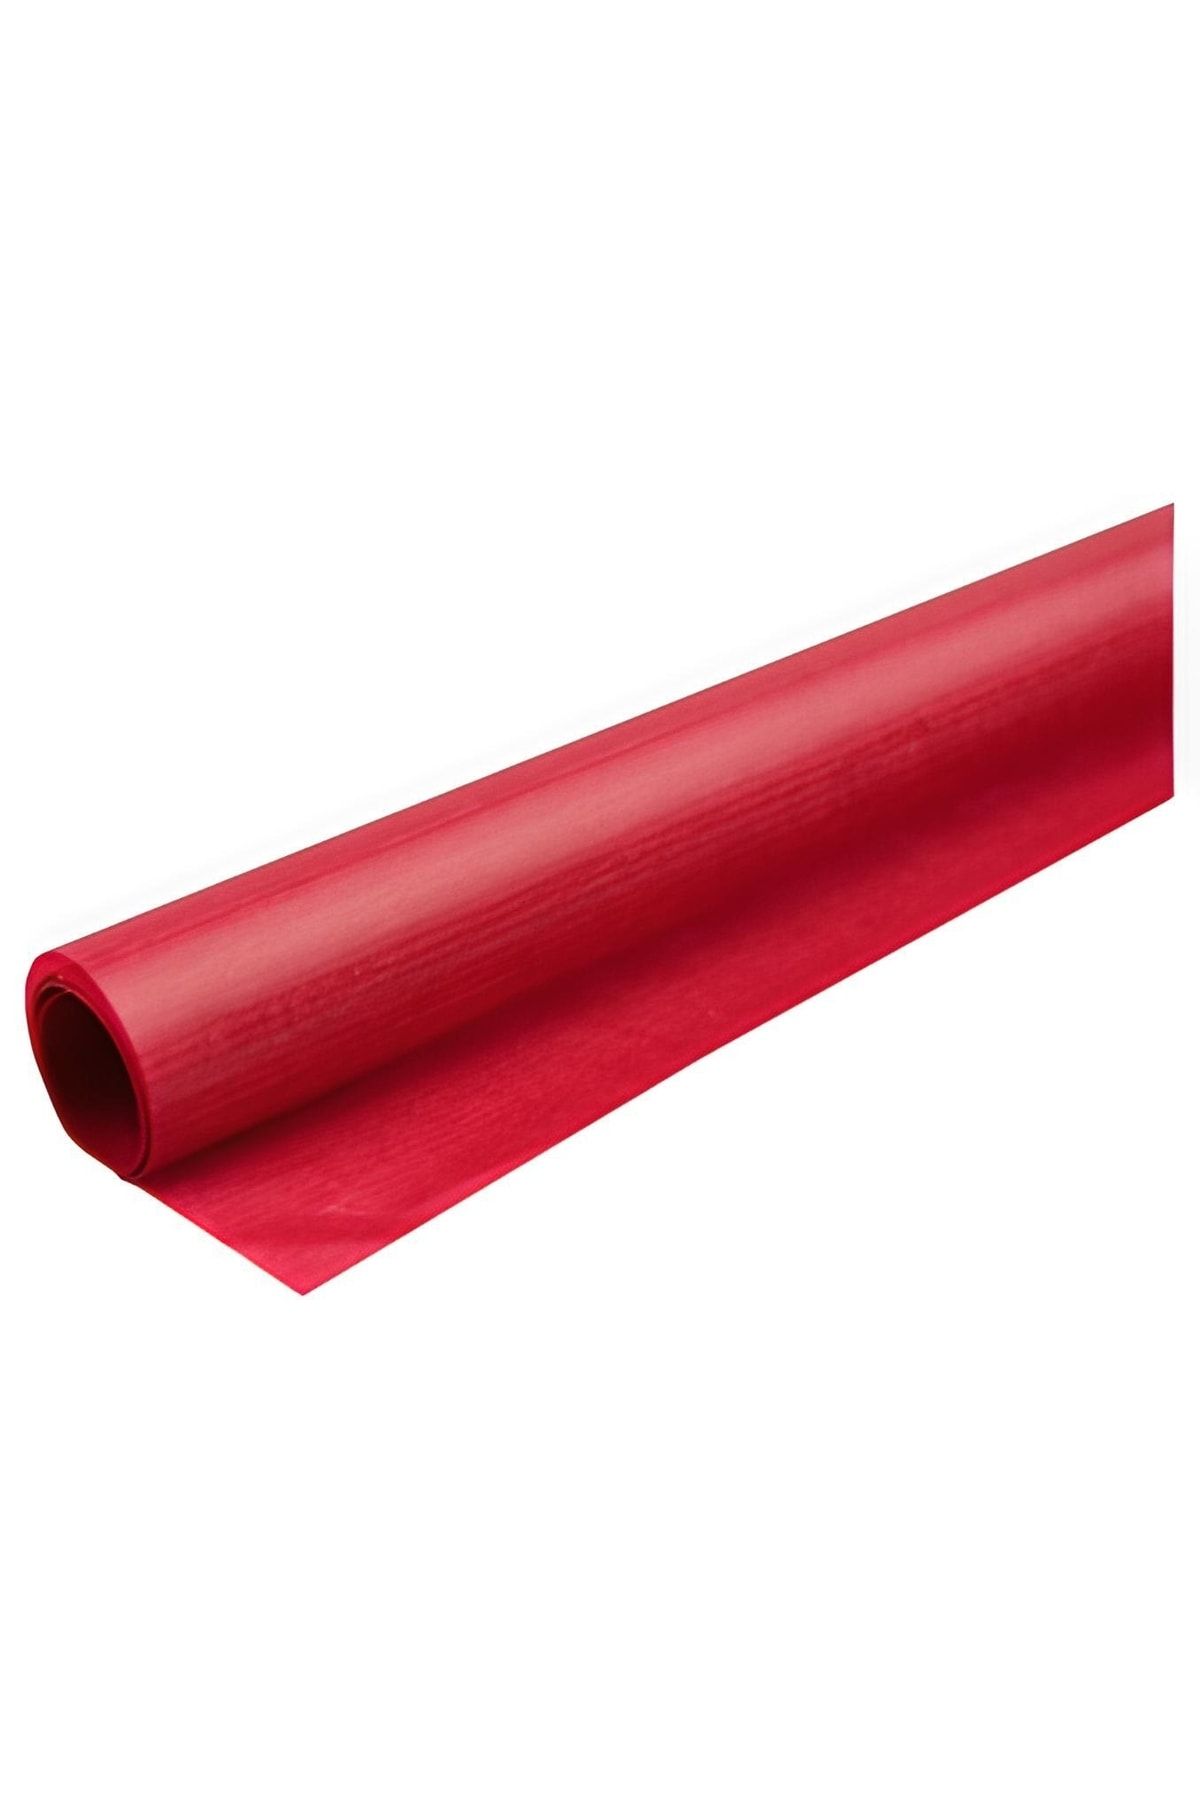 roco paper Uçurtma Kağıdı 42 Gr/m. - Kırmızı 70*100 Cm (16'LI) (500GR)